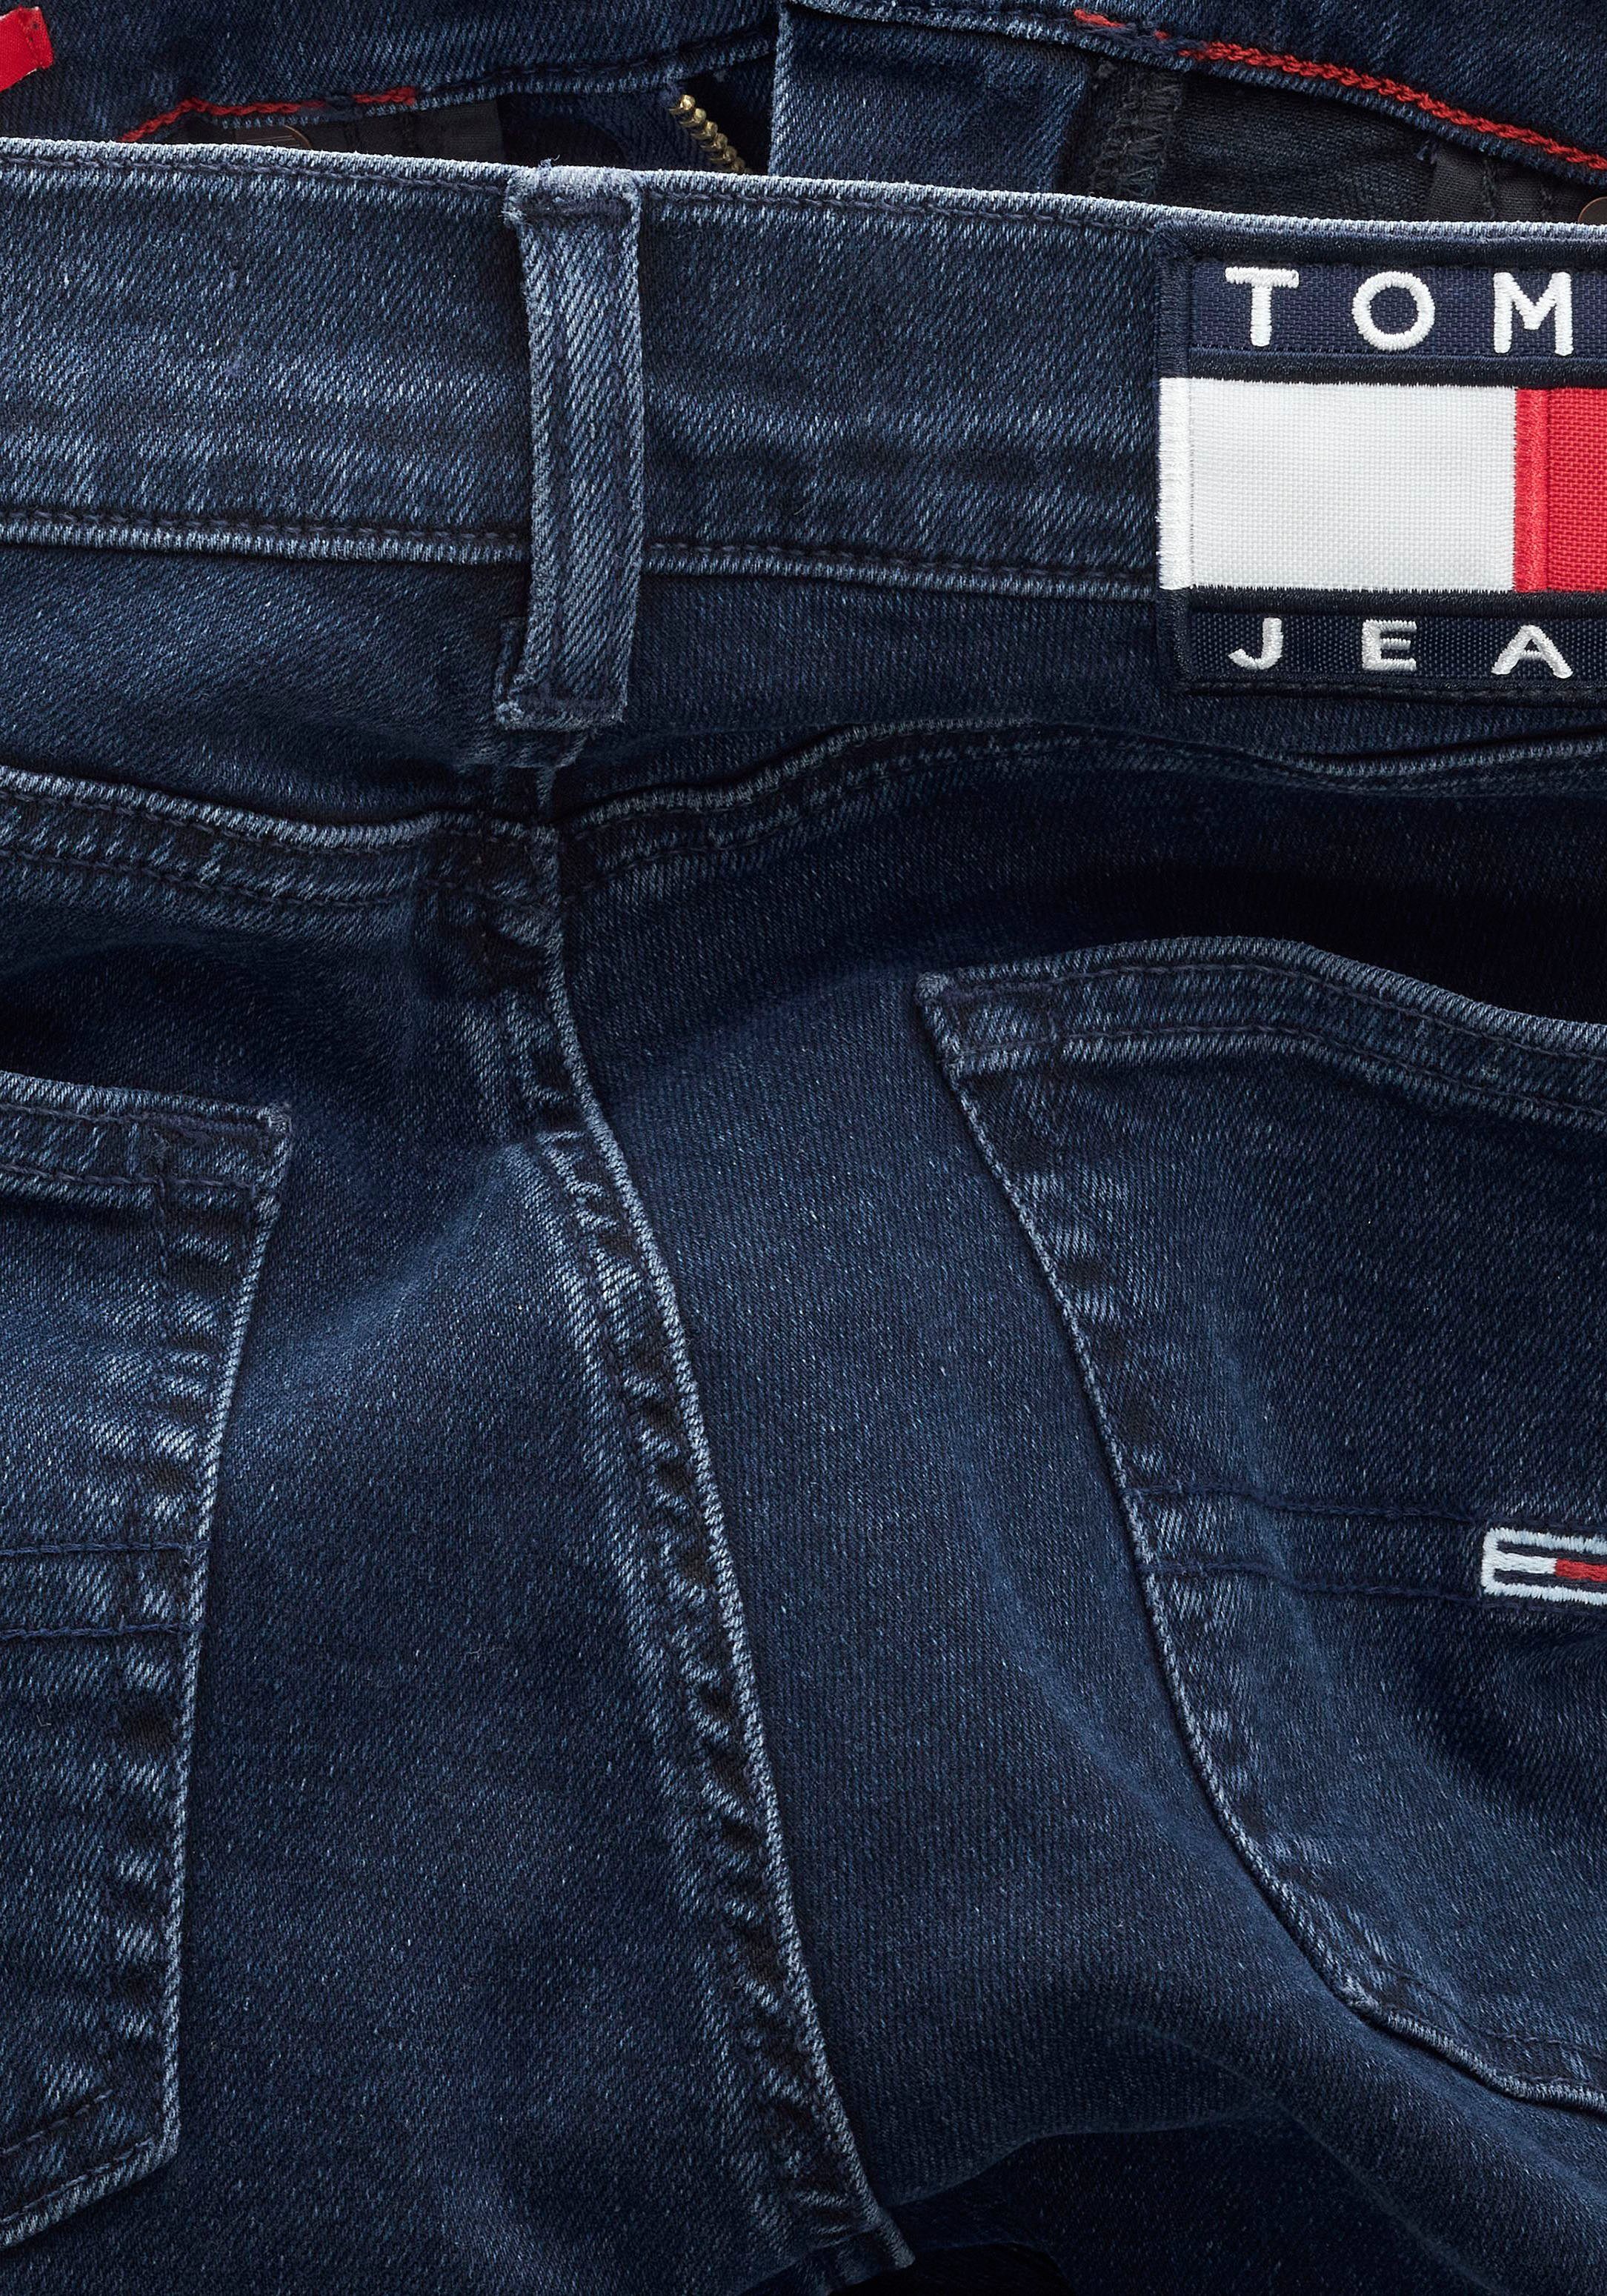 mit Skinny-fit-Jeans und Logobadge CG4 Jeans Jeans SSKN Labelflags SYLVIA HR dark_denim2 Tommy